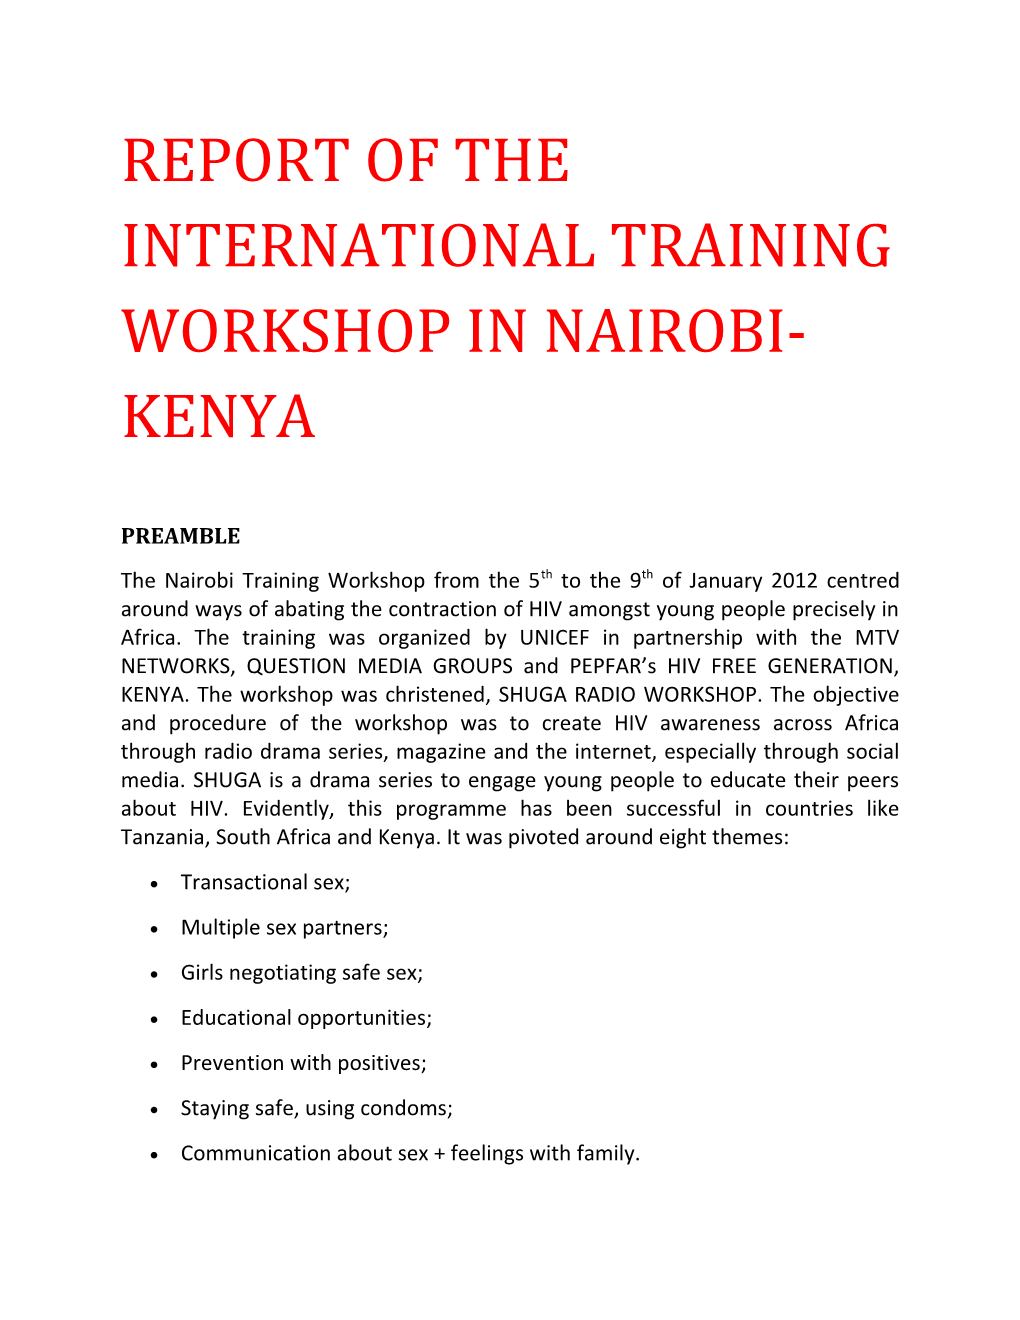 Report of the International Training Workshop in Nairobi-Kenya